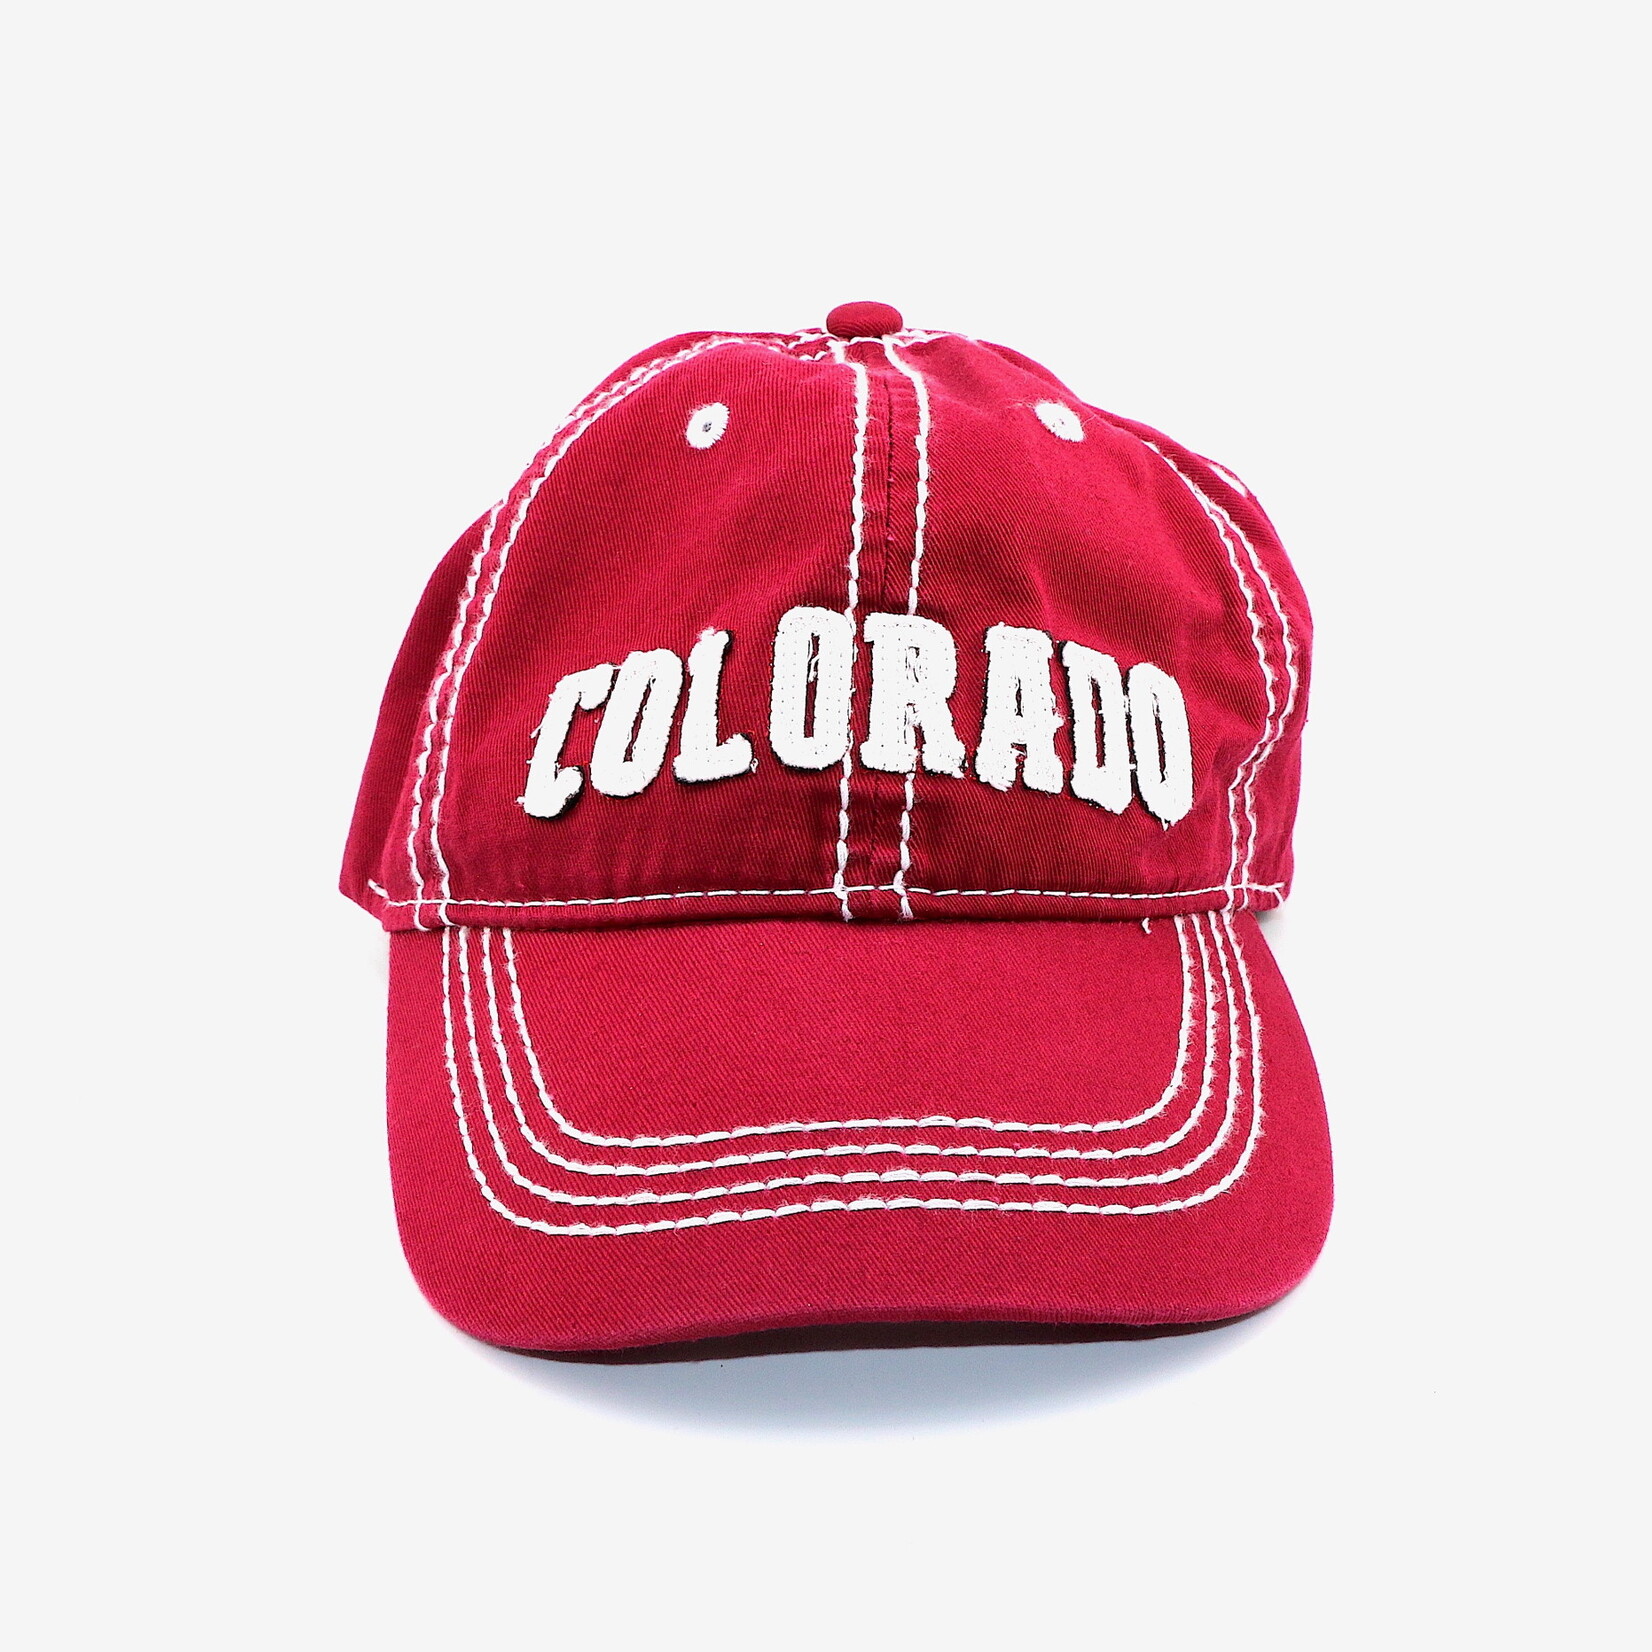 Sanborn Souvenir Co. Inc. Colorado Cap - Frayed Red